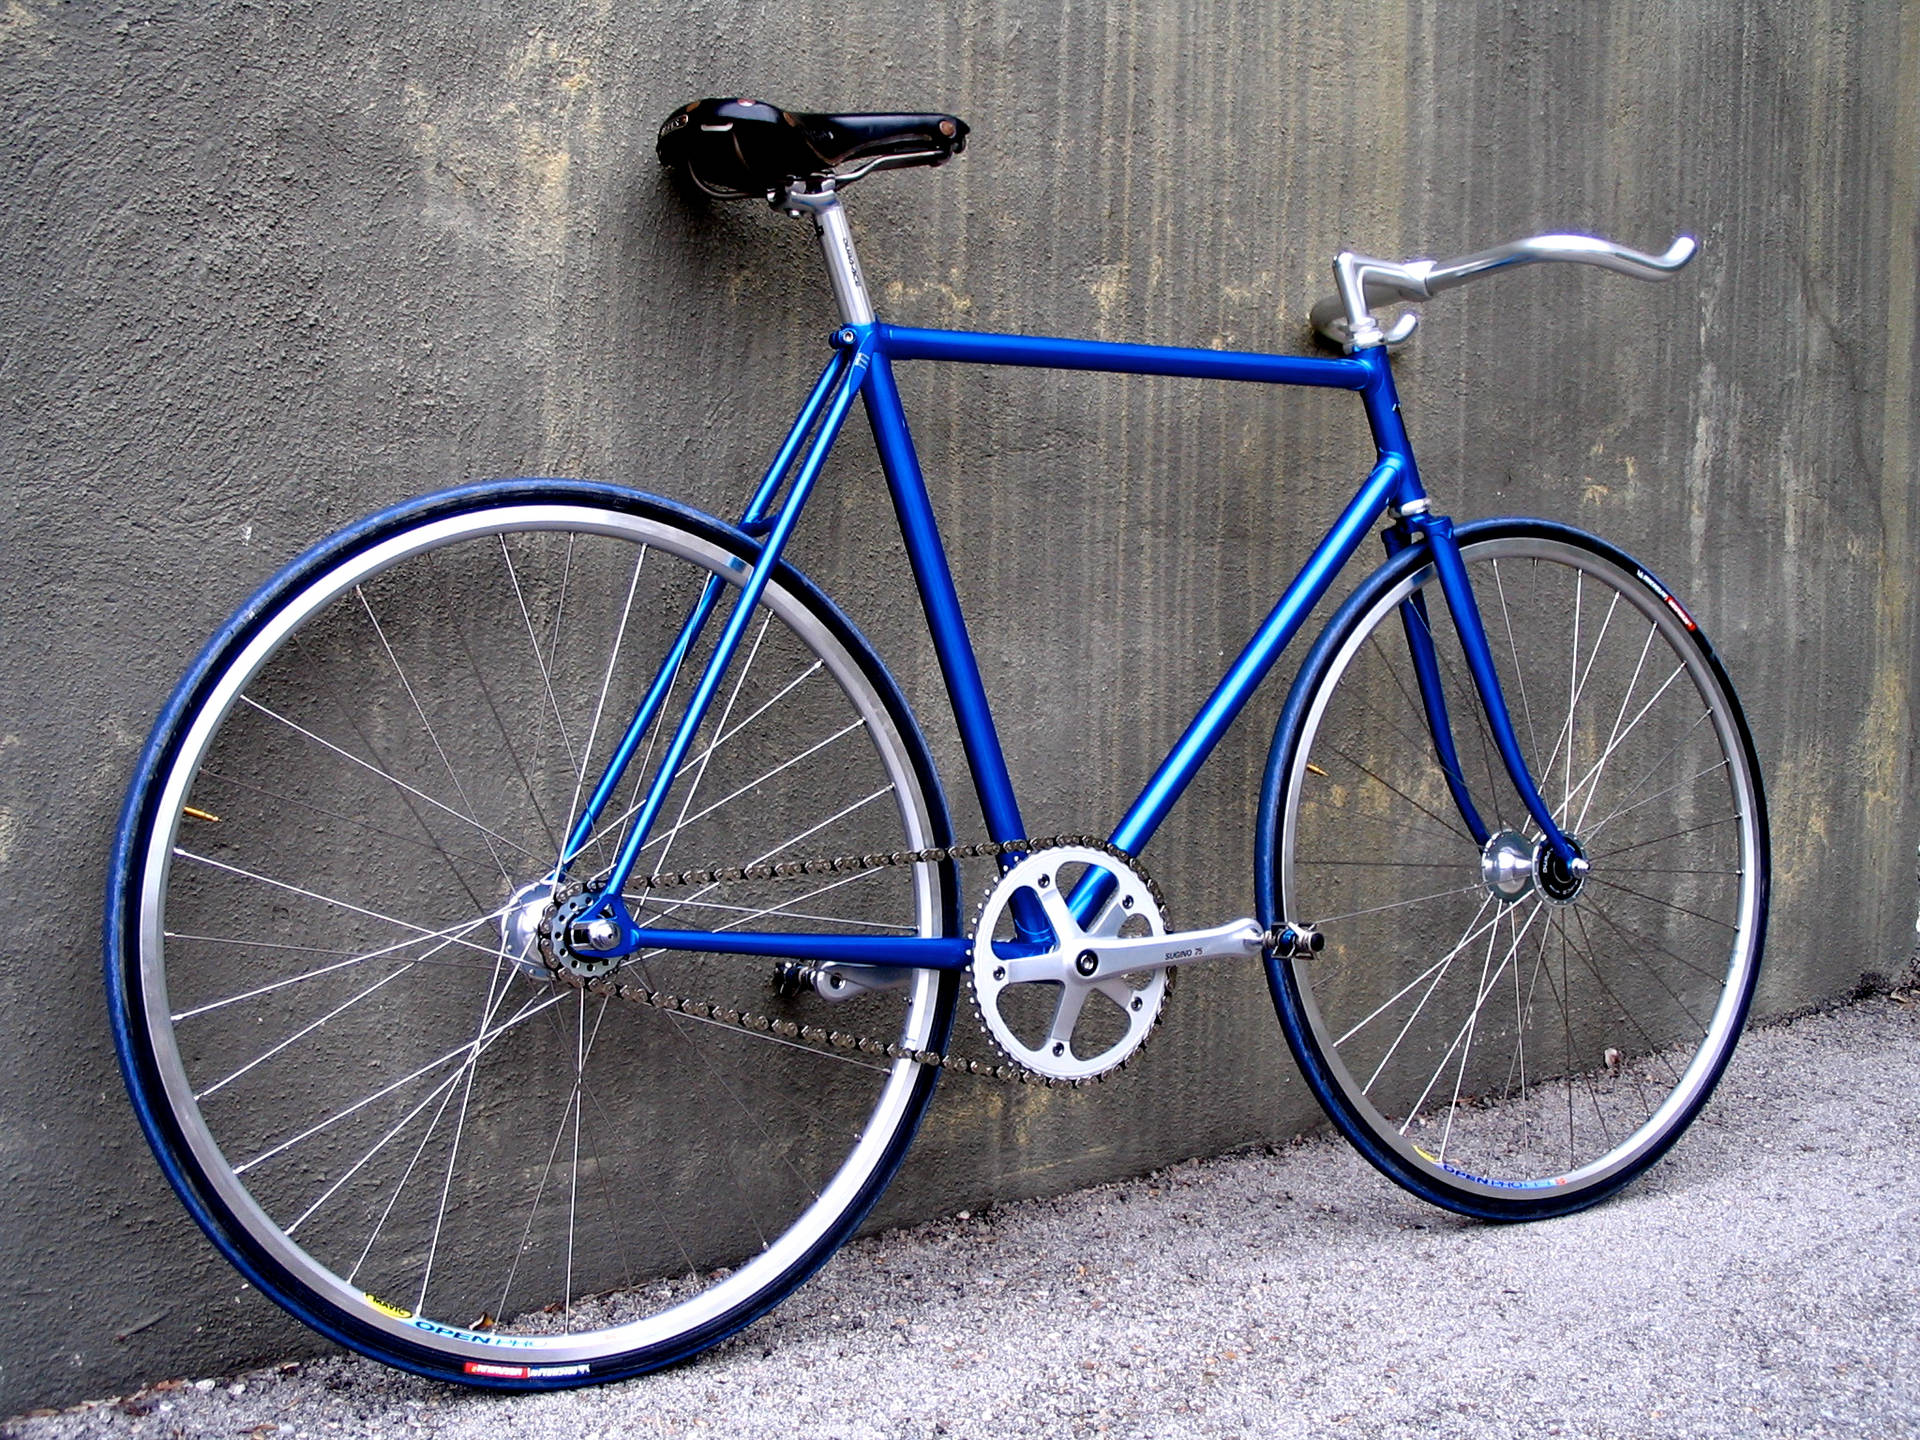 Caption: High Glossy Blue Mountain Bike, Ready For Adventure